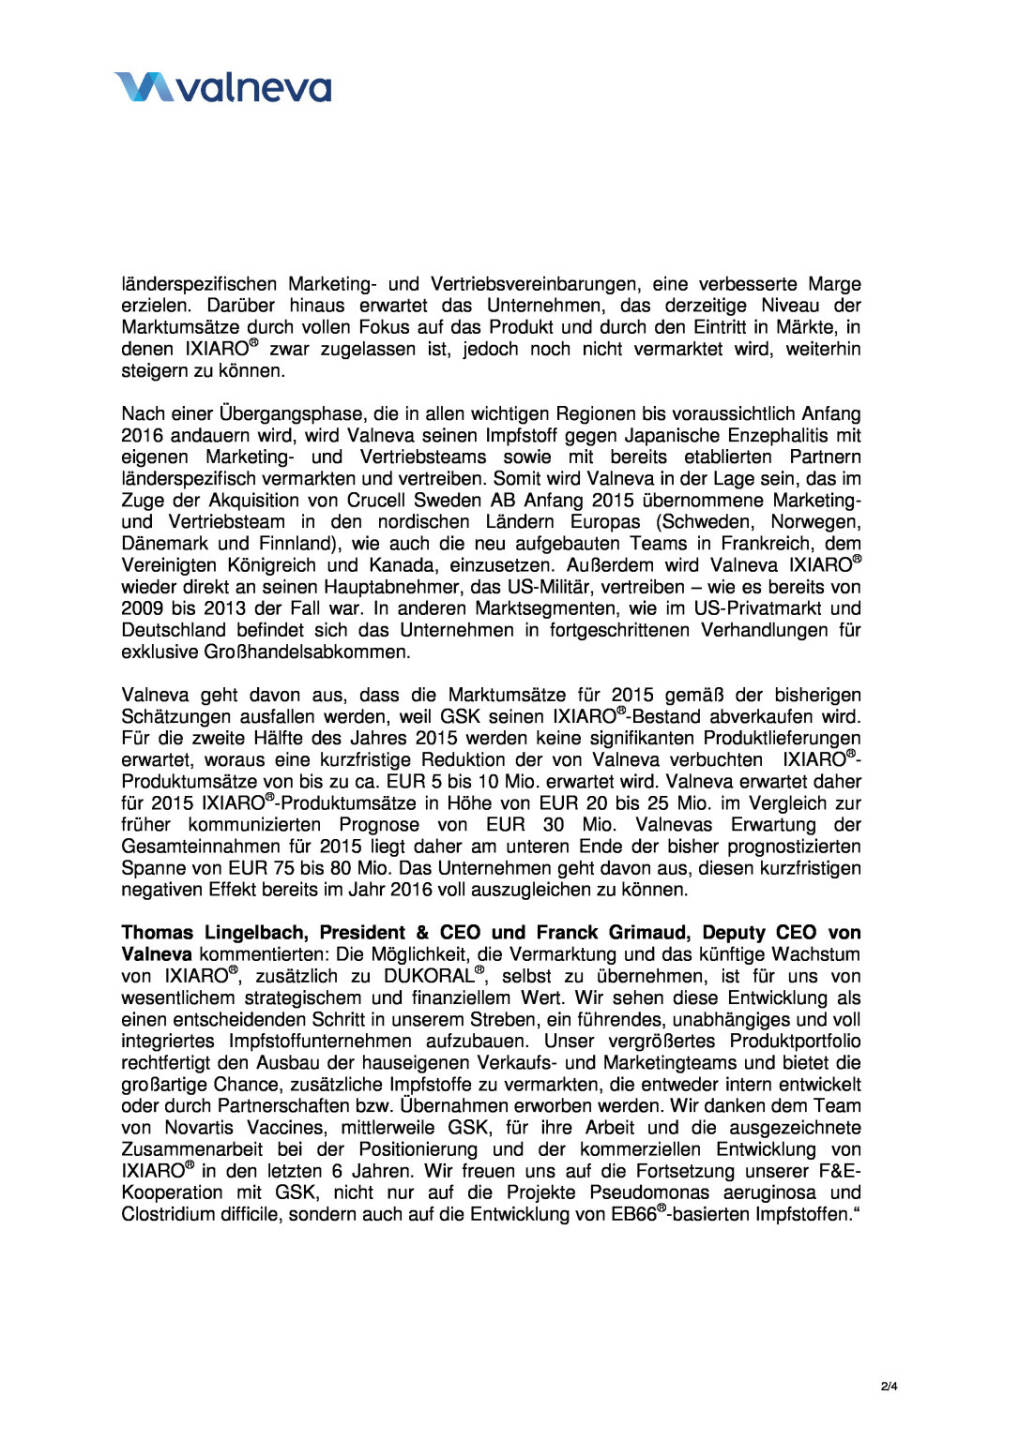 Valneva nimmt Ixiaro-Vermarktung selbst, Seite 2/4, komplettes Dokument unter http://boerse-social.com/static/uploads/file_154_valneva_ixiaro.pdf